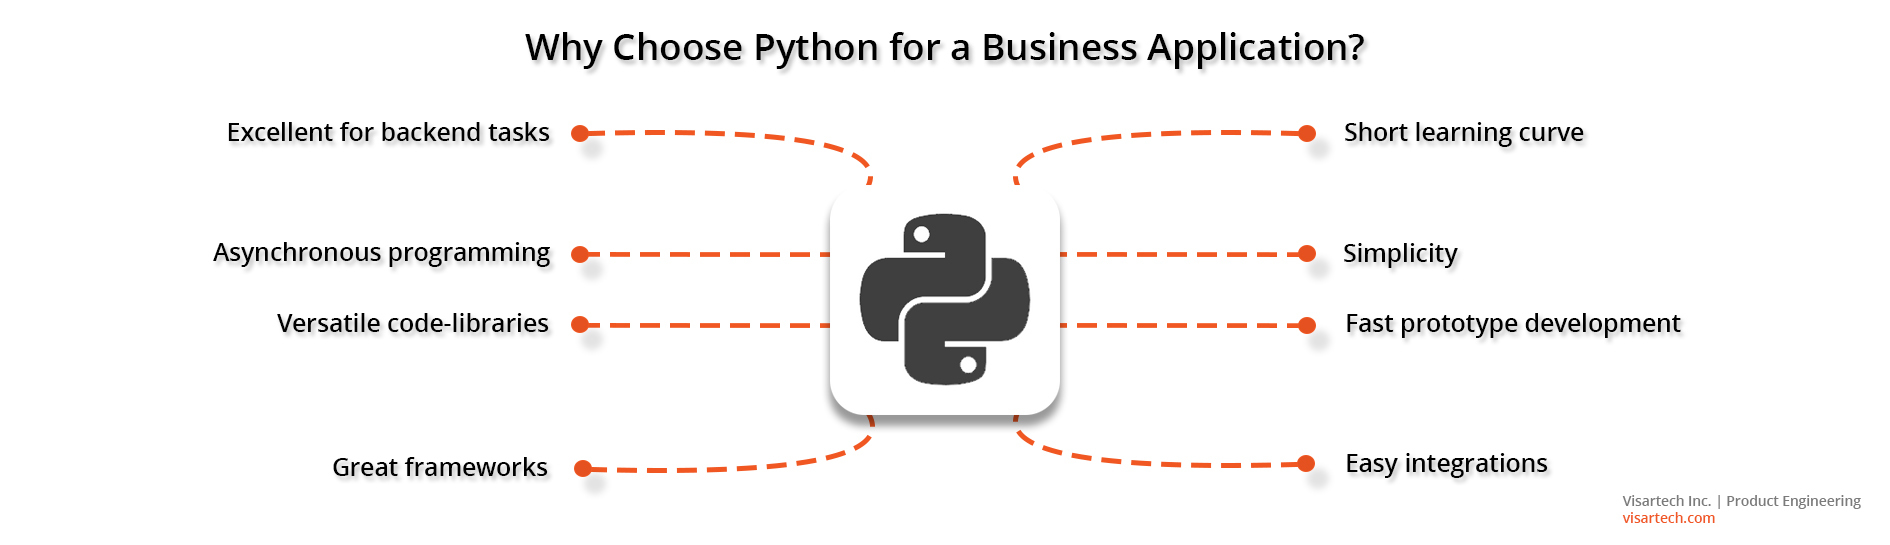 Benefits of Python in apps - Visartech Blog